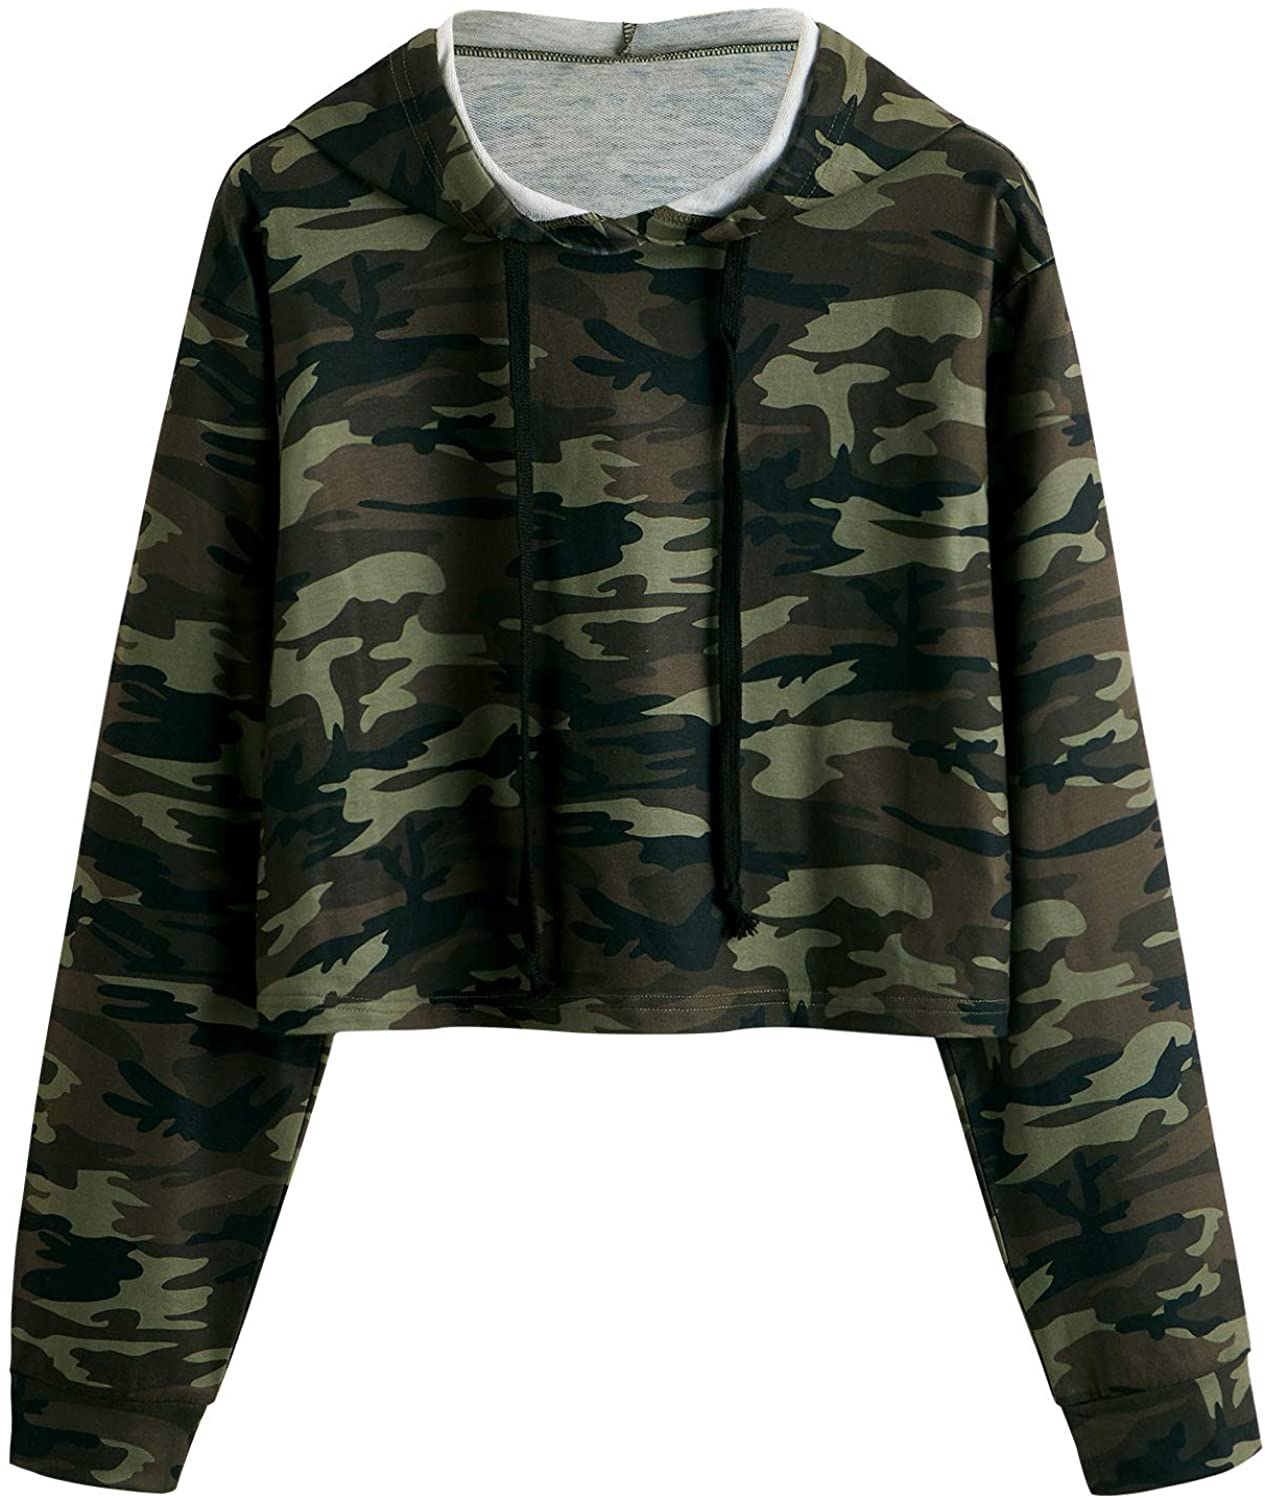 MakeMeChic Women's Camo Printed Long Sleeve Sweatshirt Crop Top Hoodies